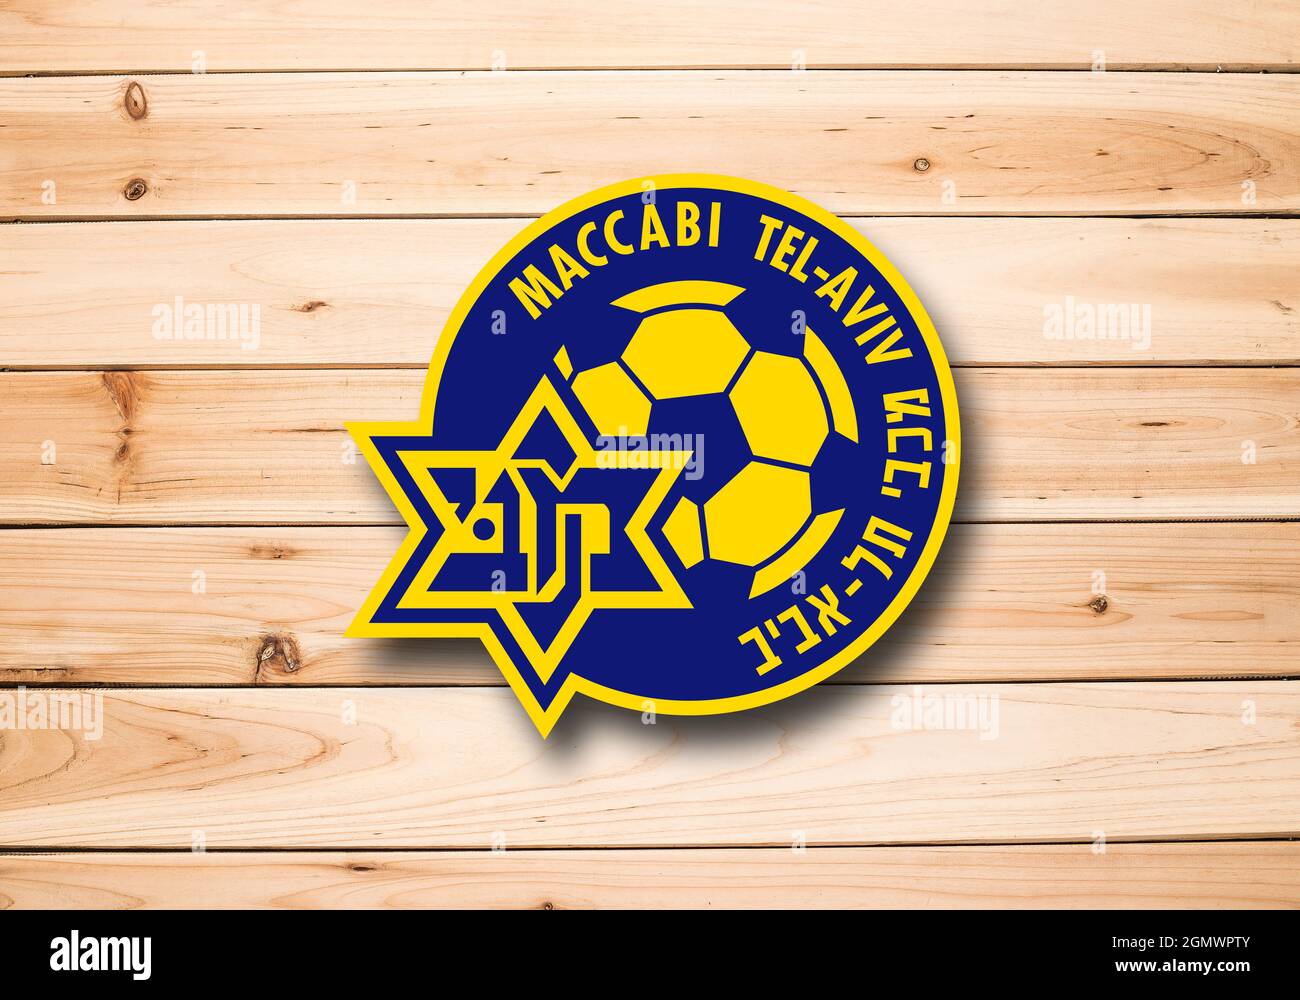 Maccabi tel aviv football club hi-res stock photography and images - Alamy